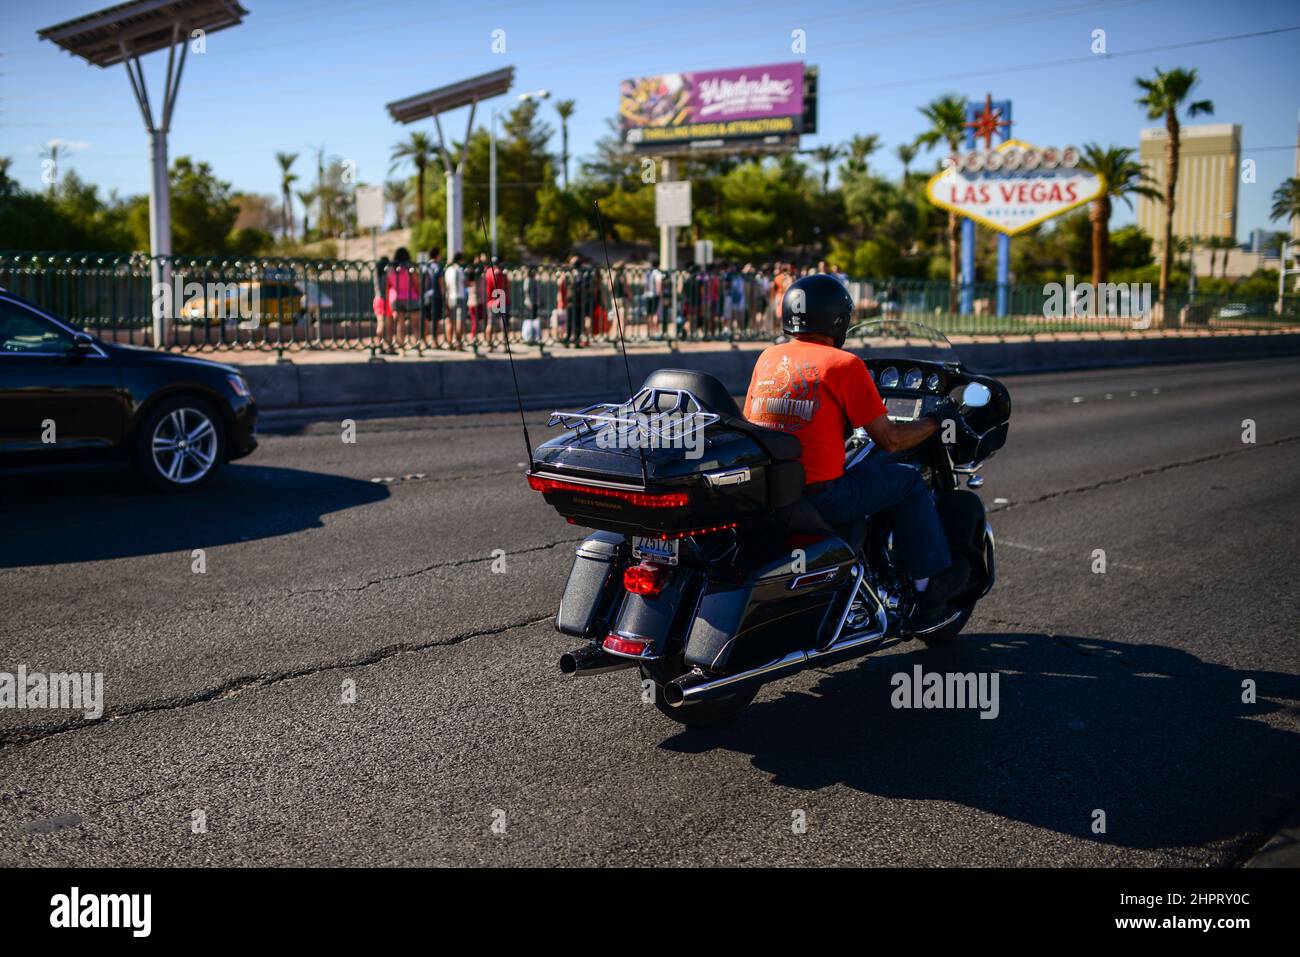 Harley Davidson rider in Las Vegas Stock Photo